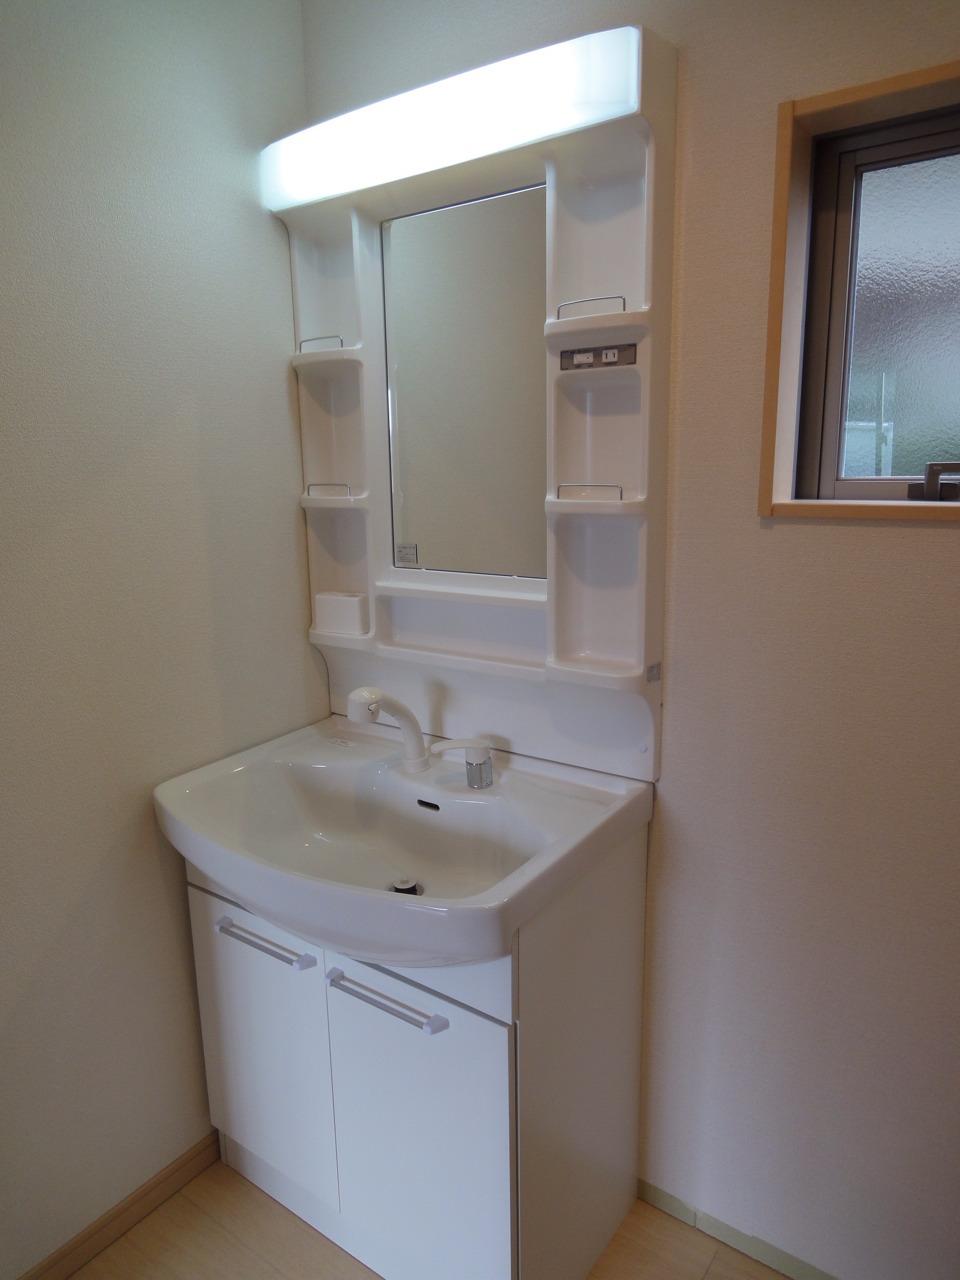 Wash basin, toilet. (2013.11.12 shooting)